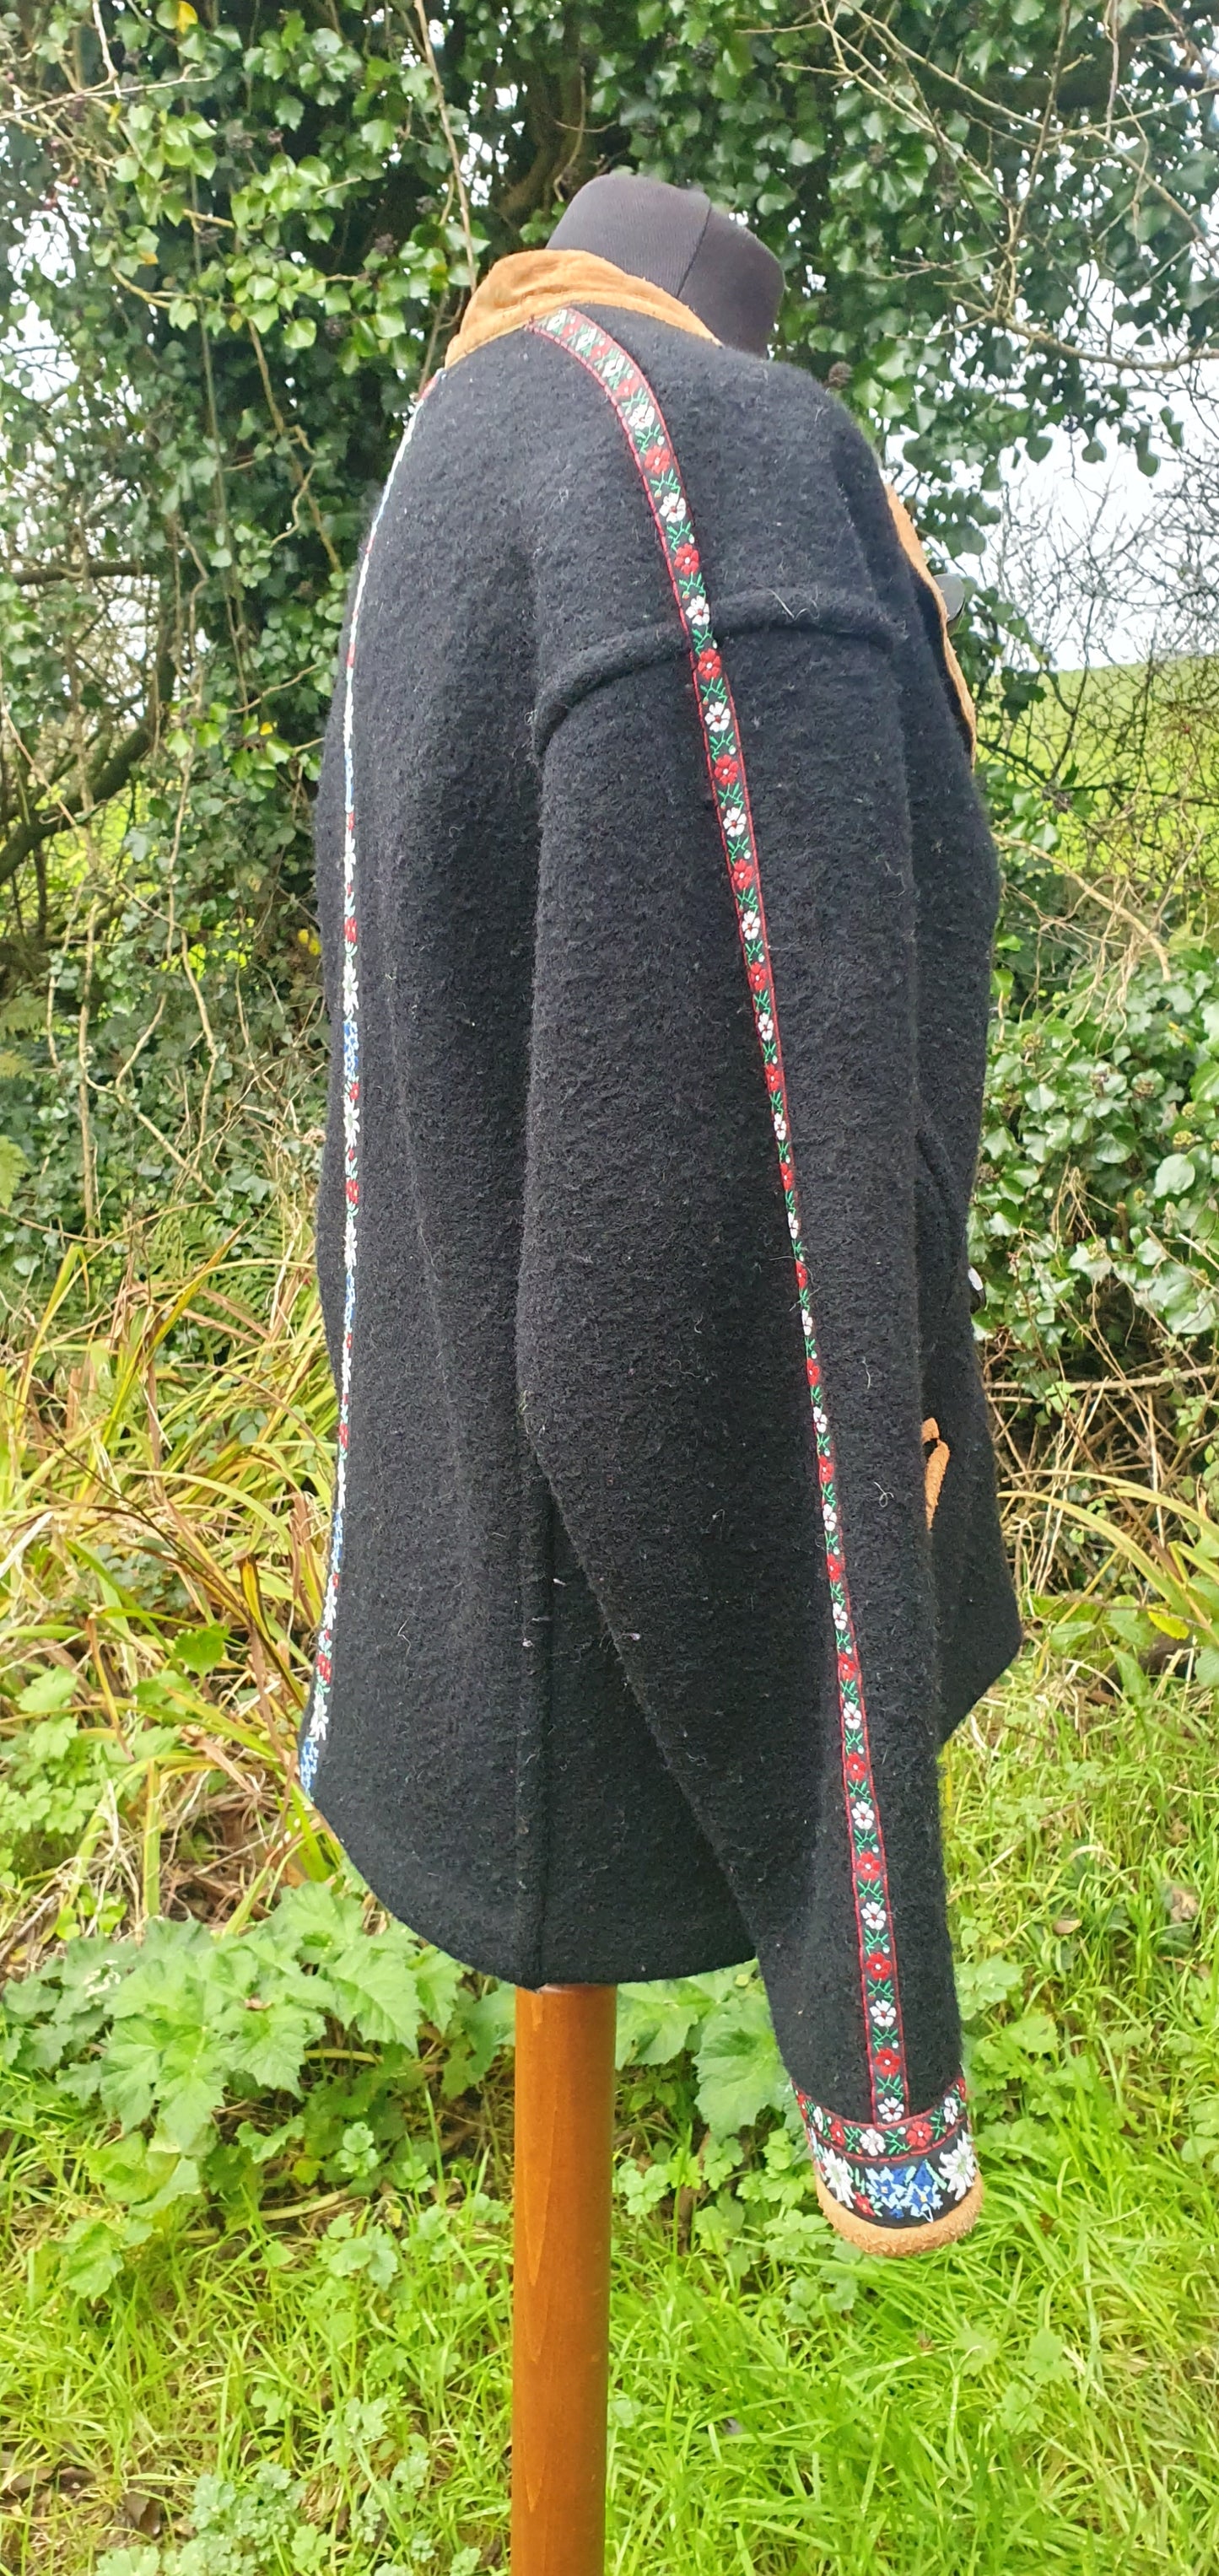 Vintage wool coat size 14